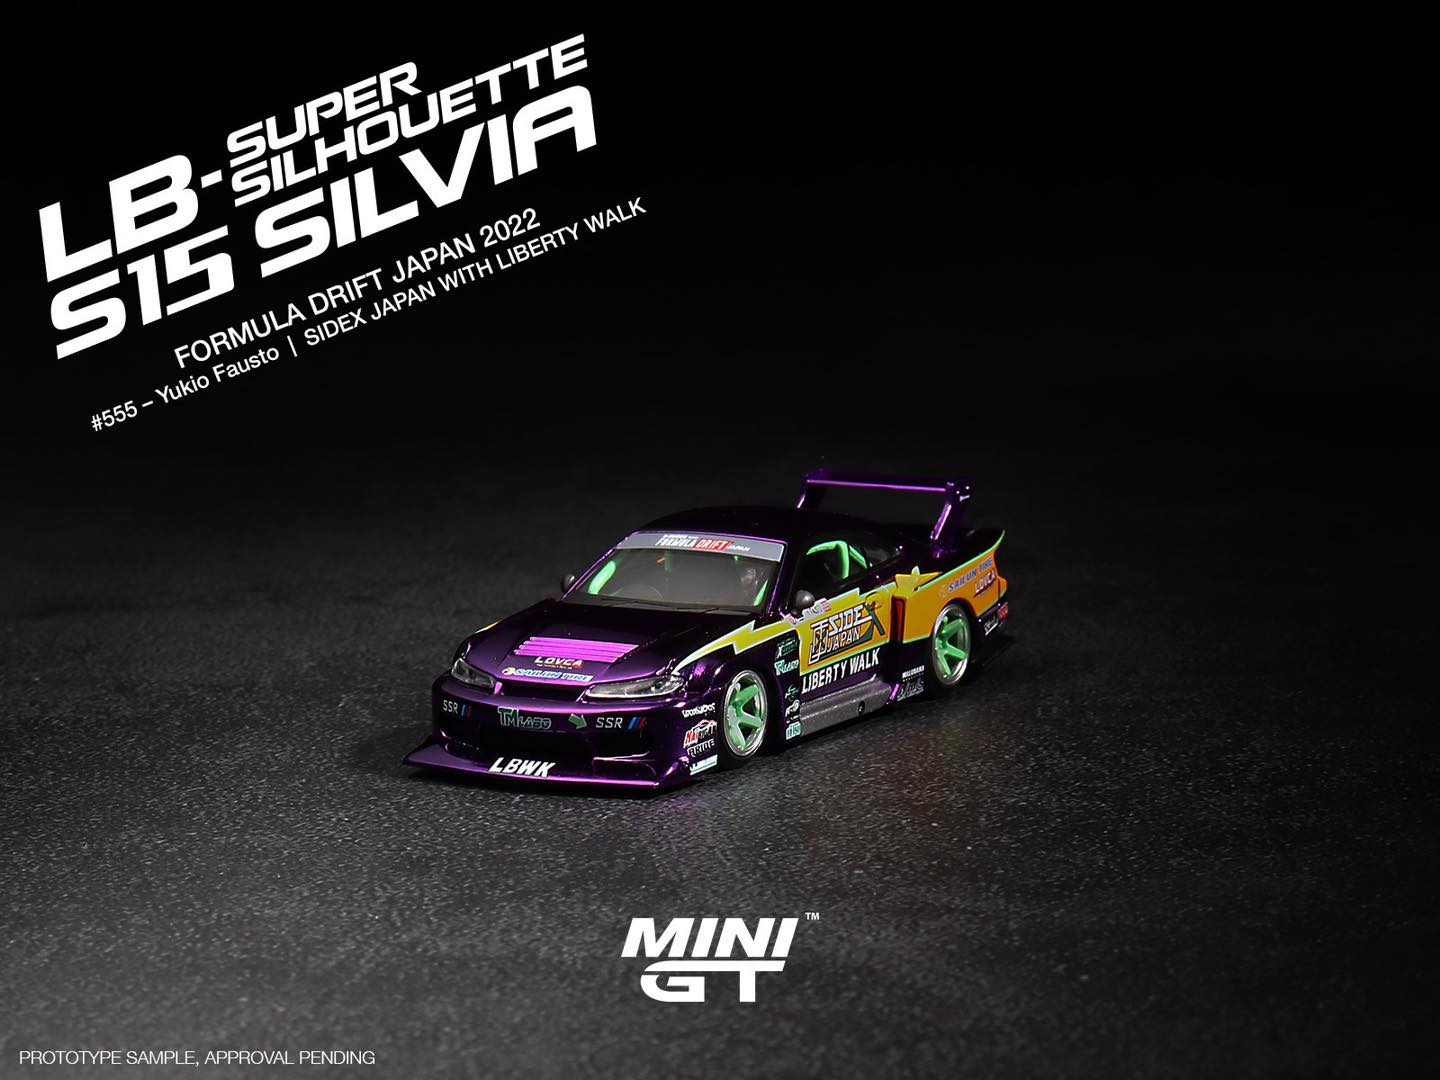 Mini GT #576 LB-Super Silhouette S15 Silvia Formula Drift Japan